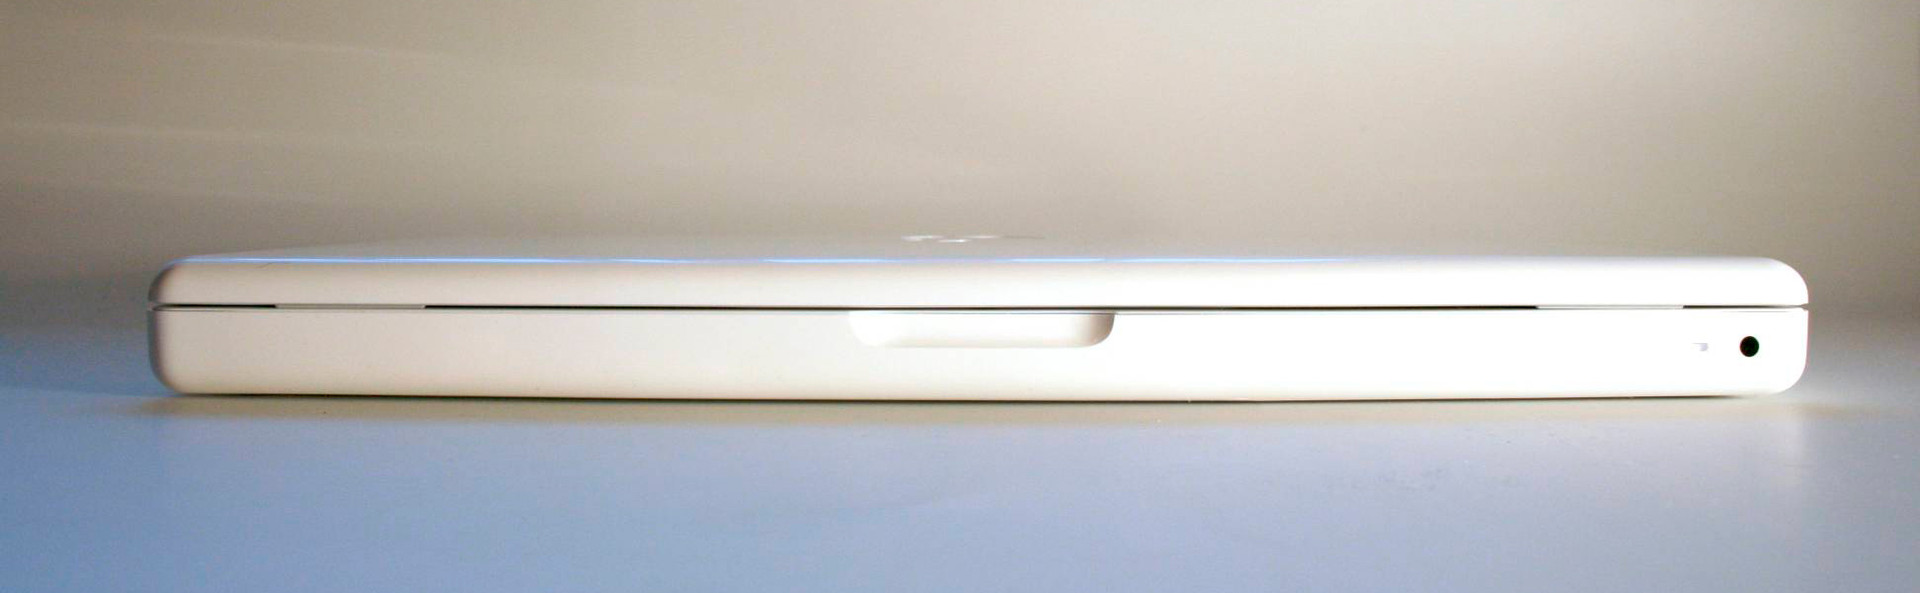 apple macbook white mid 2009